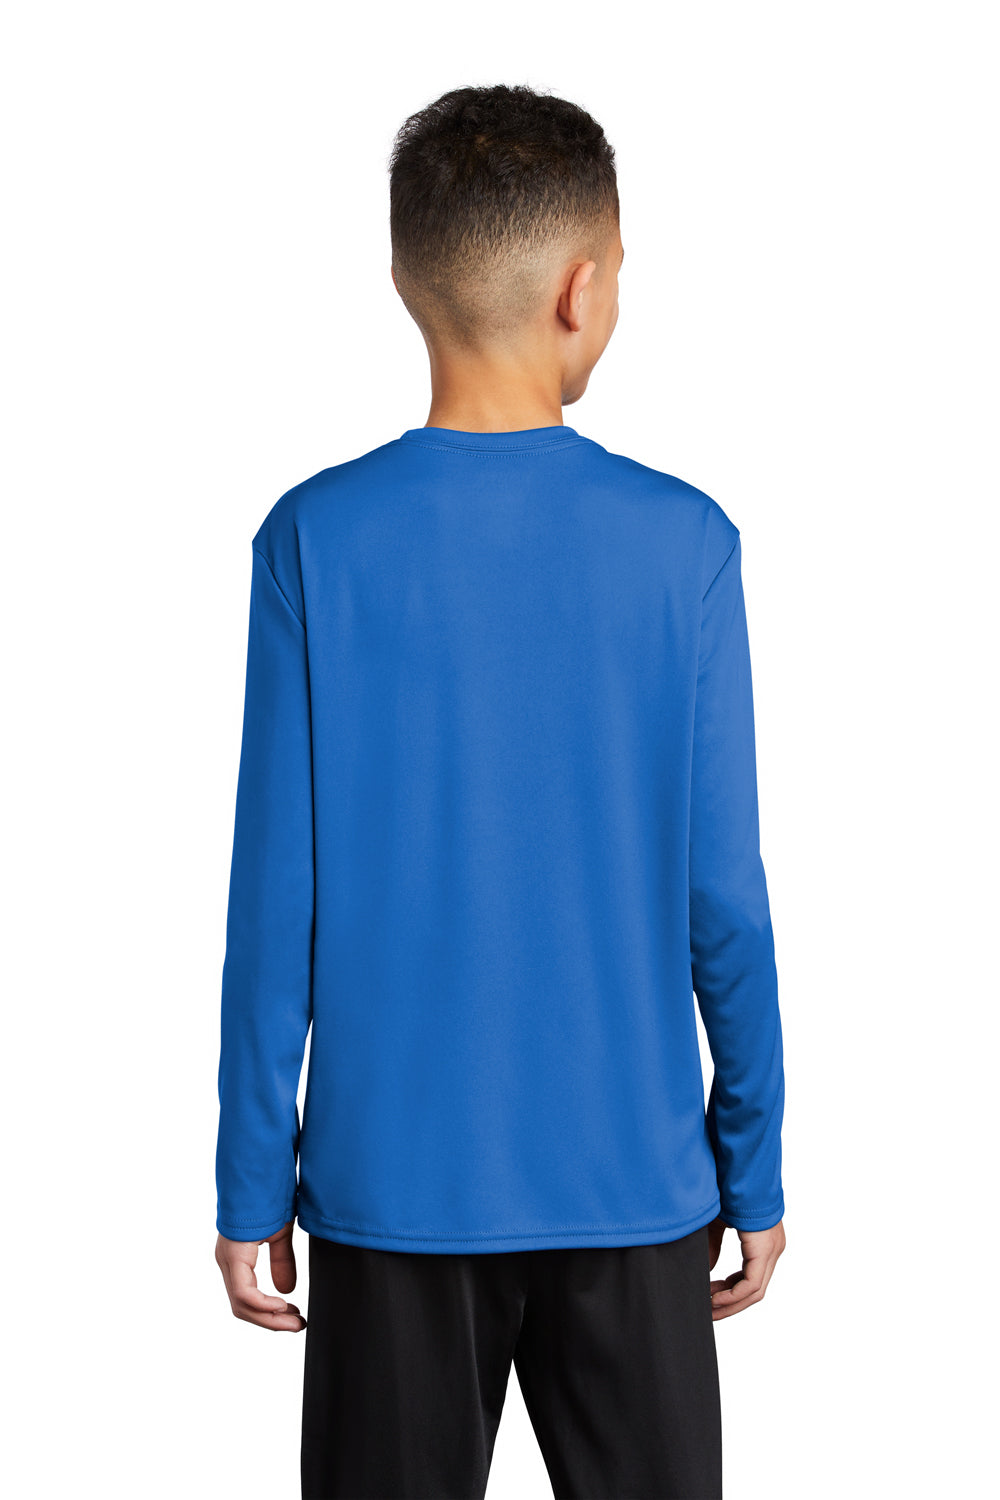 Port & Company Youth Performance Long Sleeve Crewneck T-Shirt Royal Blue Side